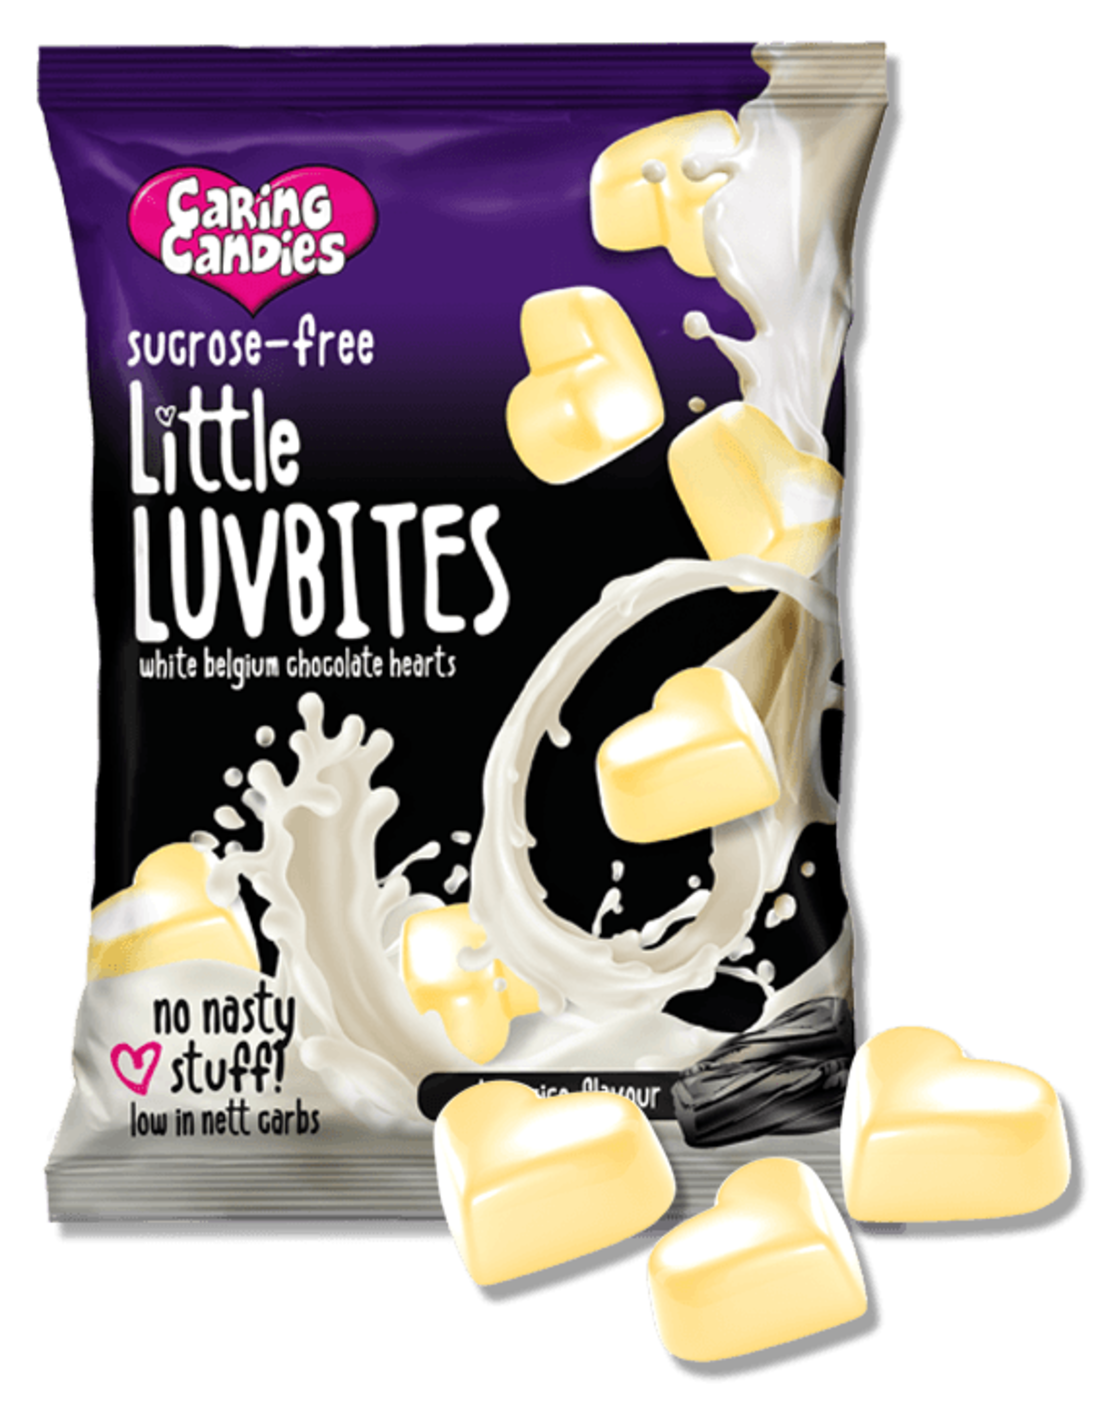 Little Luvbites Sucrose Free White Belgium Chocolate Hearts Liquorice Flavour - 100 gr 